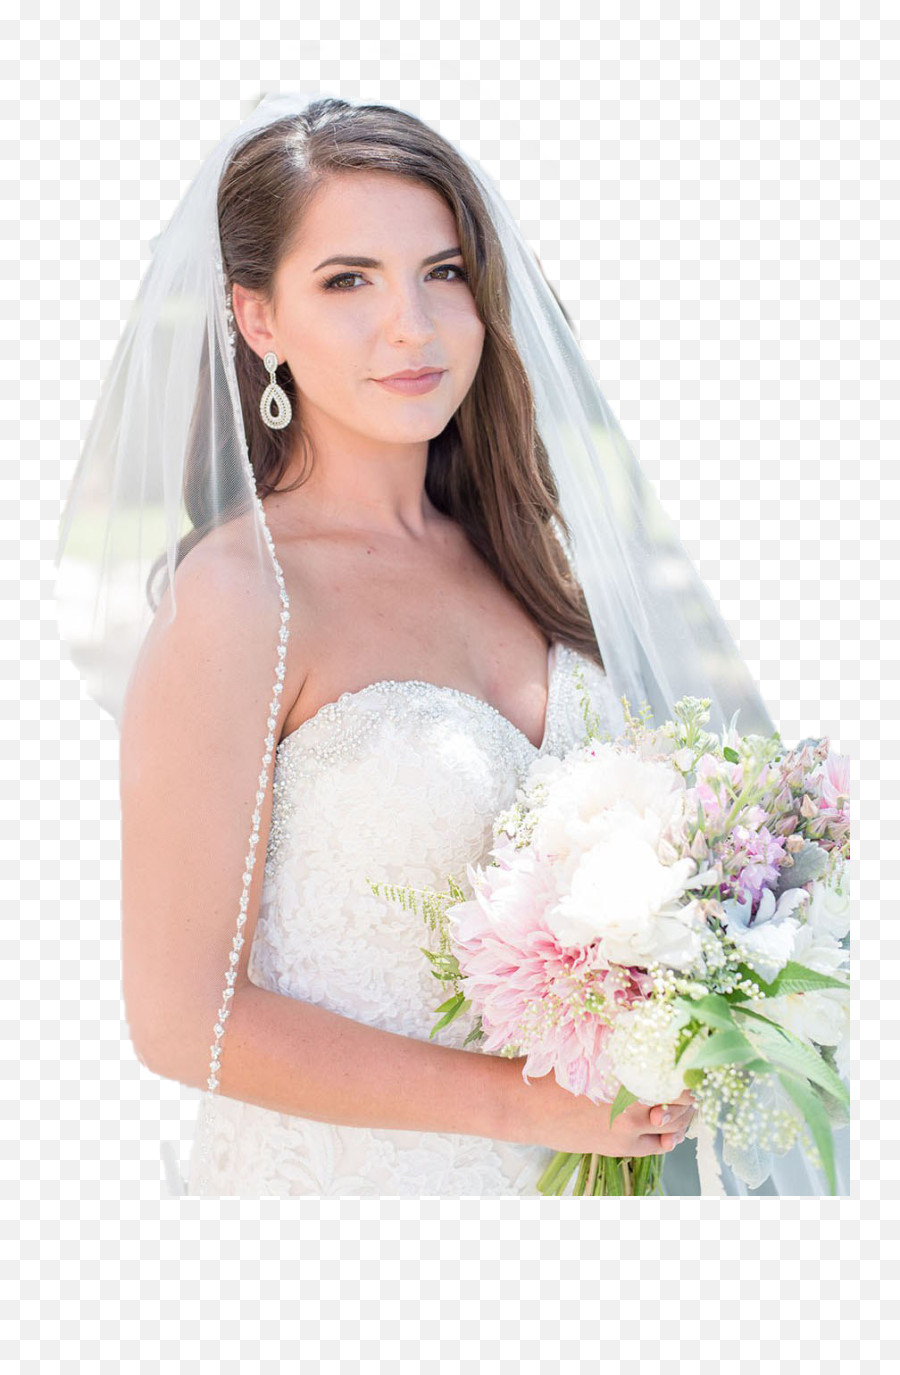 Bride Png High Quality Image Emoji,Bride Png